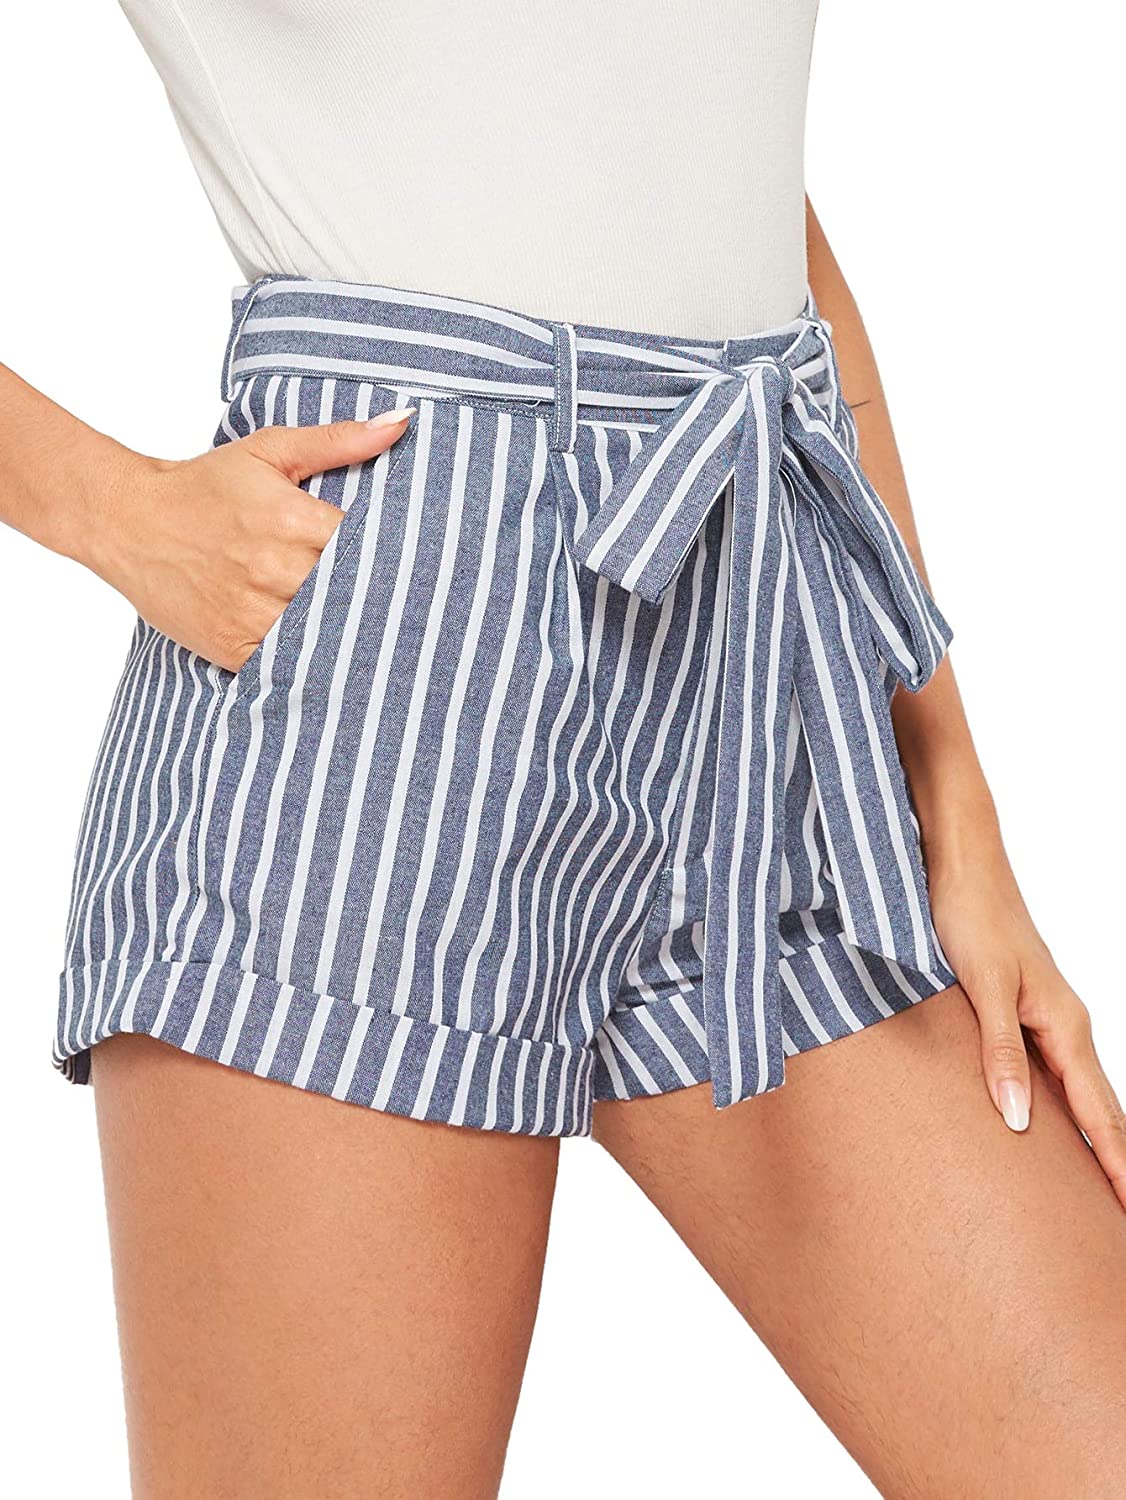 SweatyRocks Womens Casual Elastic Waist Striped Summer Beach Shorts with Pockets 